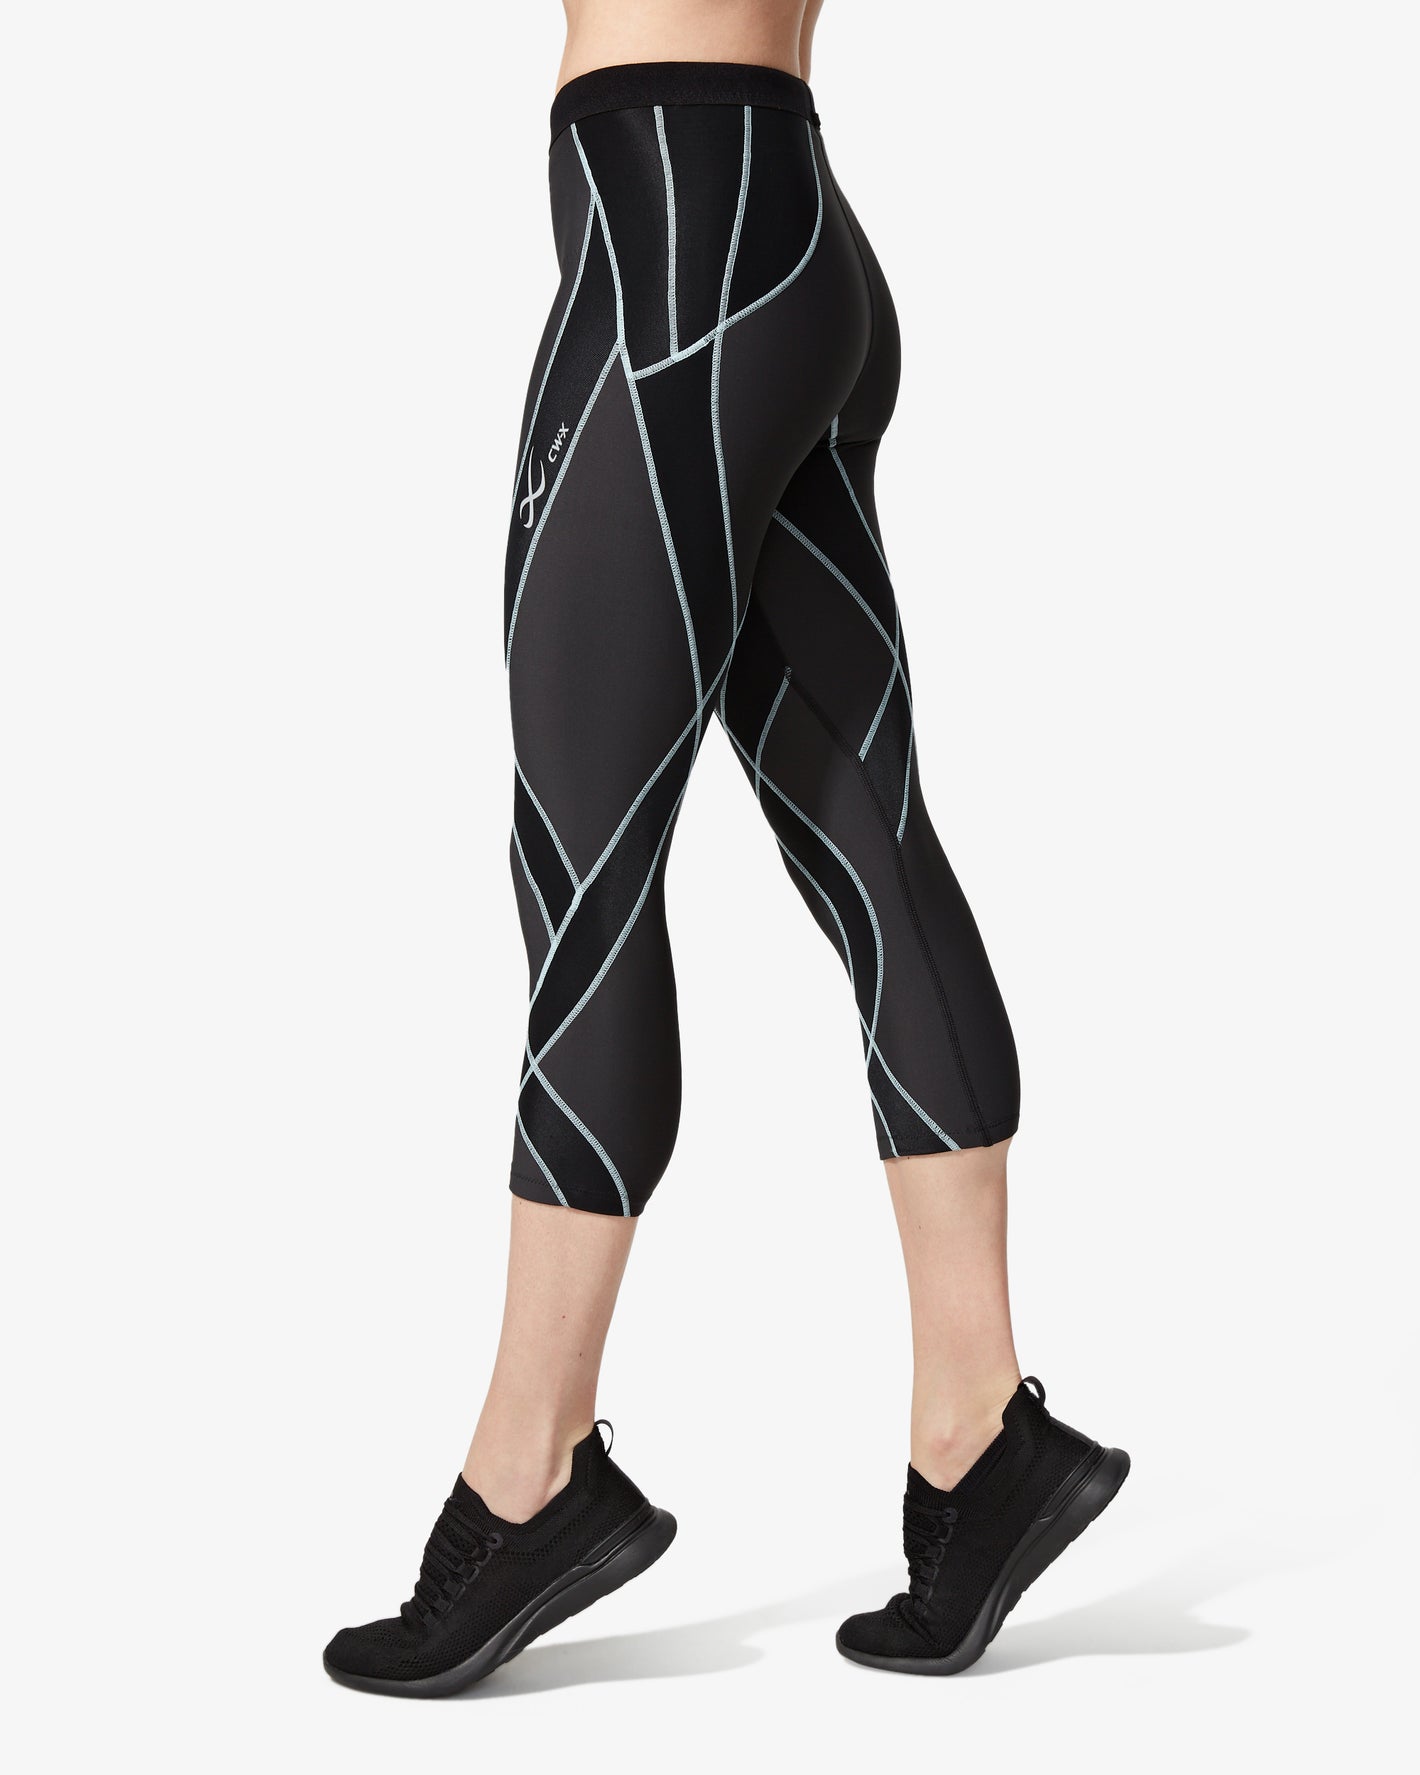 Black crop top and legging set - Yoga & Dance wear - 4 way lycra - Nachke  Dance fashion